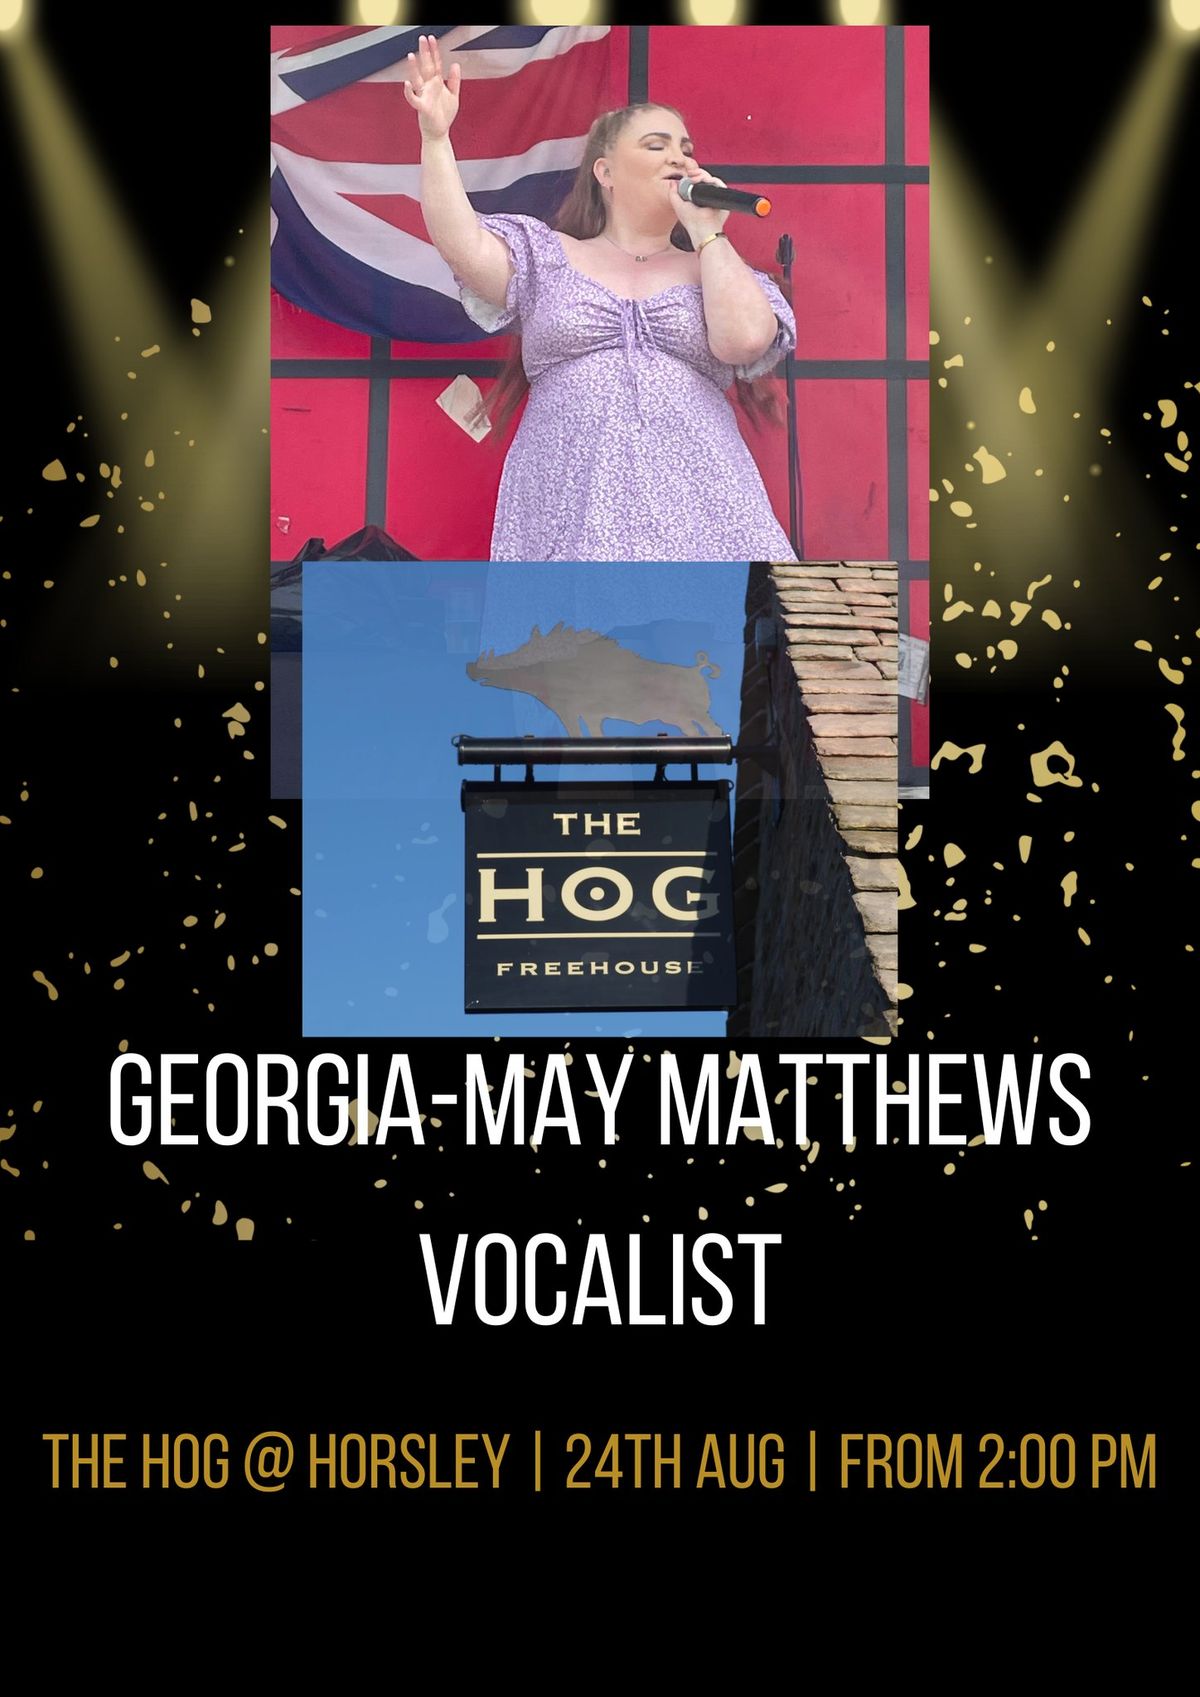 GEORGIA-MAY MATTHEWS VOCALIST @ THE HOG